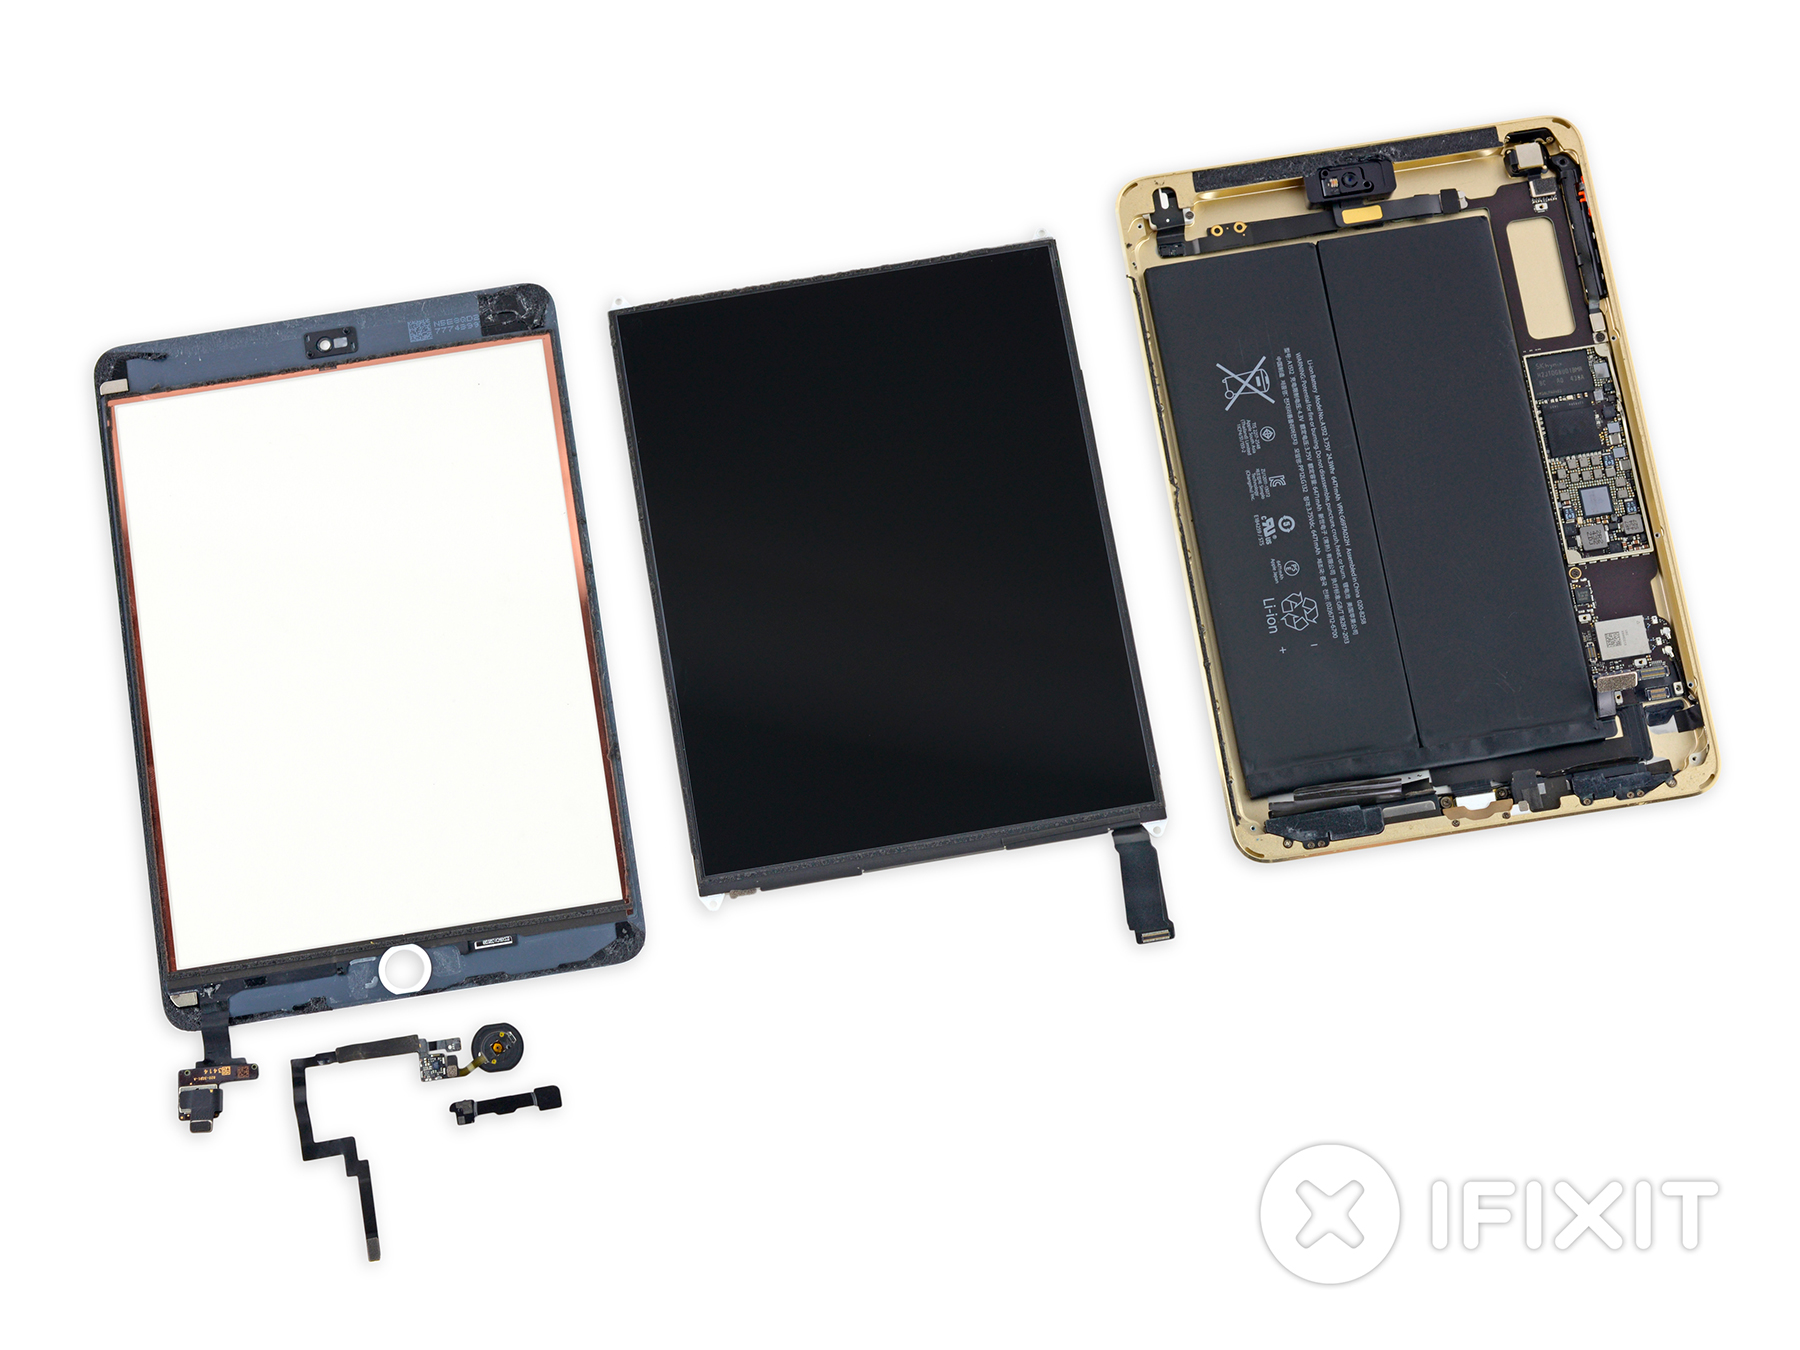 iPad mini 3 desmontado pela iFixit